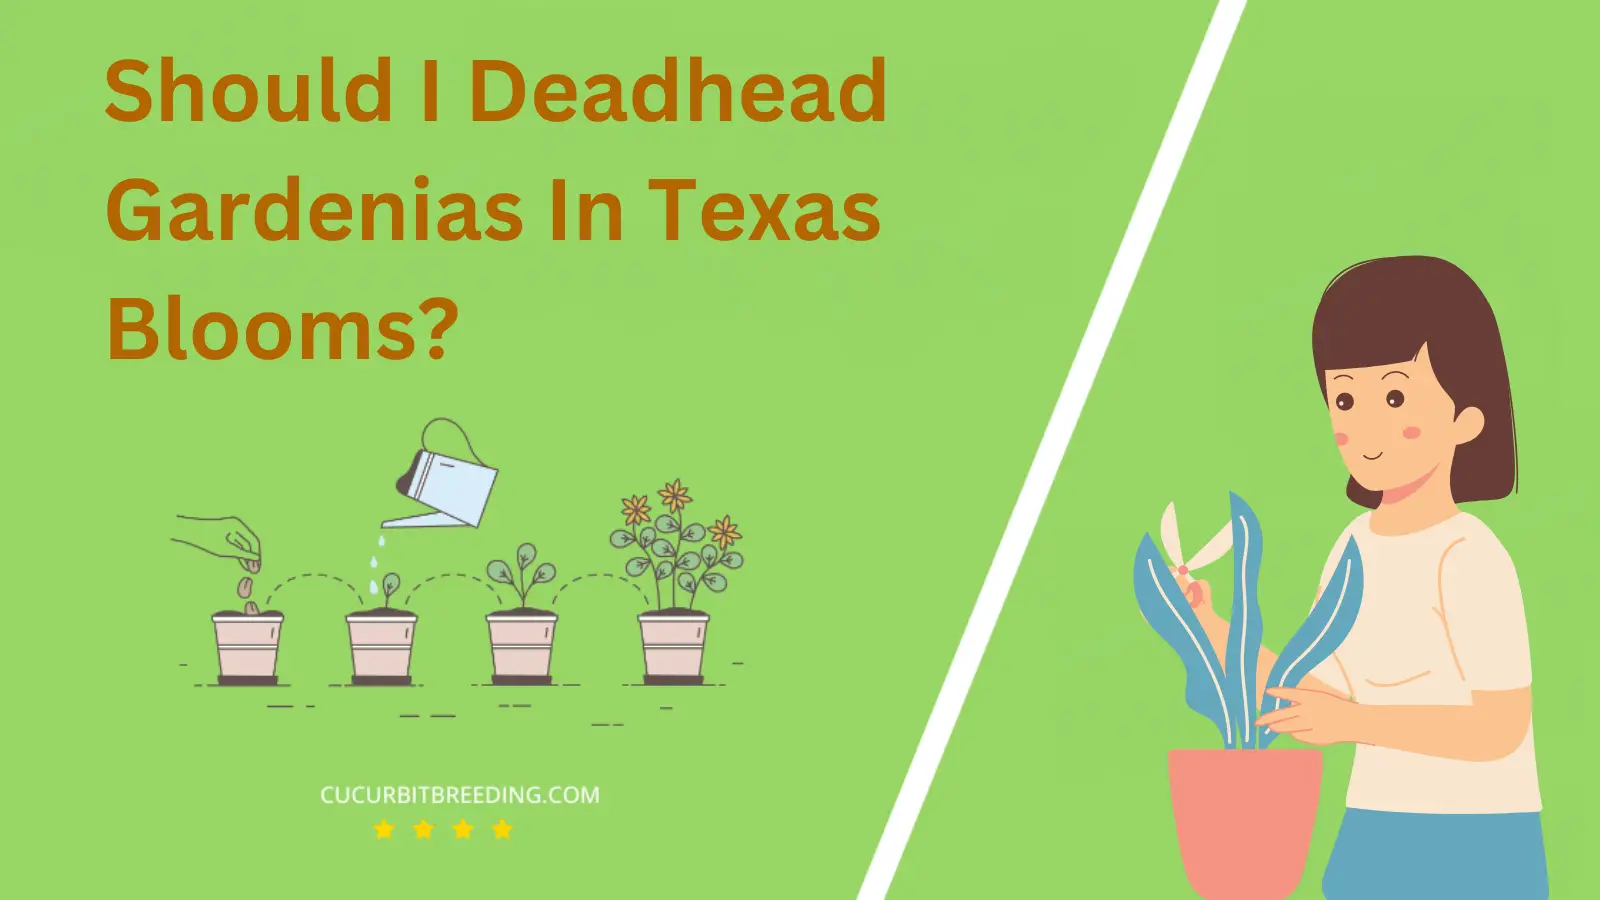 Should I Deadhead Gardenias In Texas Blooms?